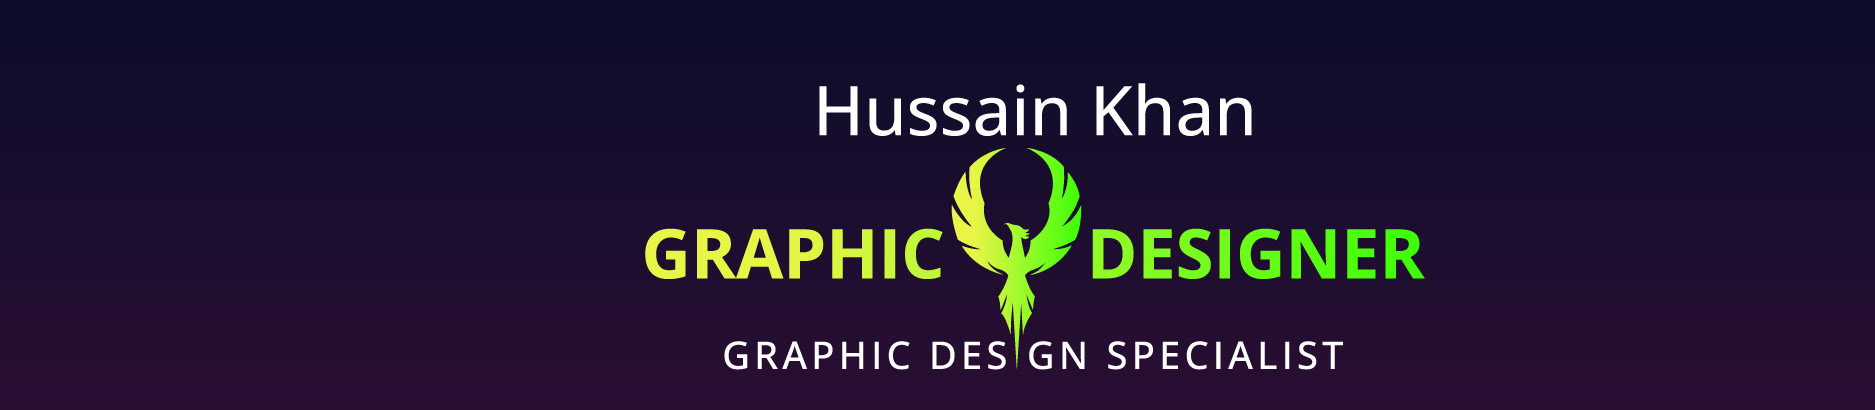 Hussain Khan's profile banner